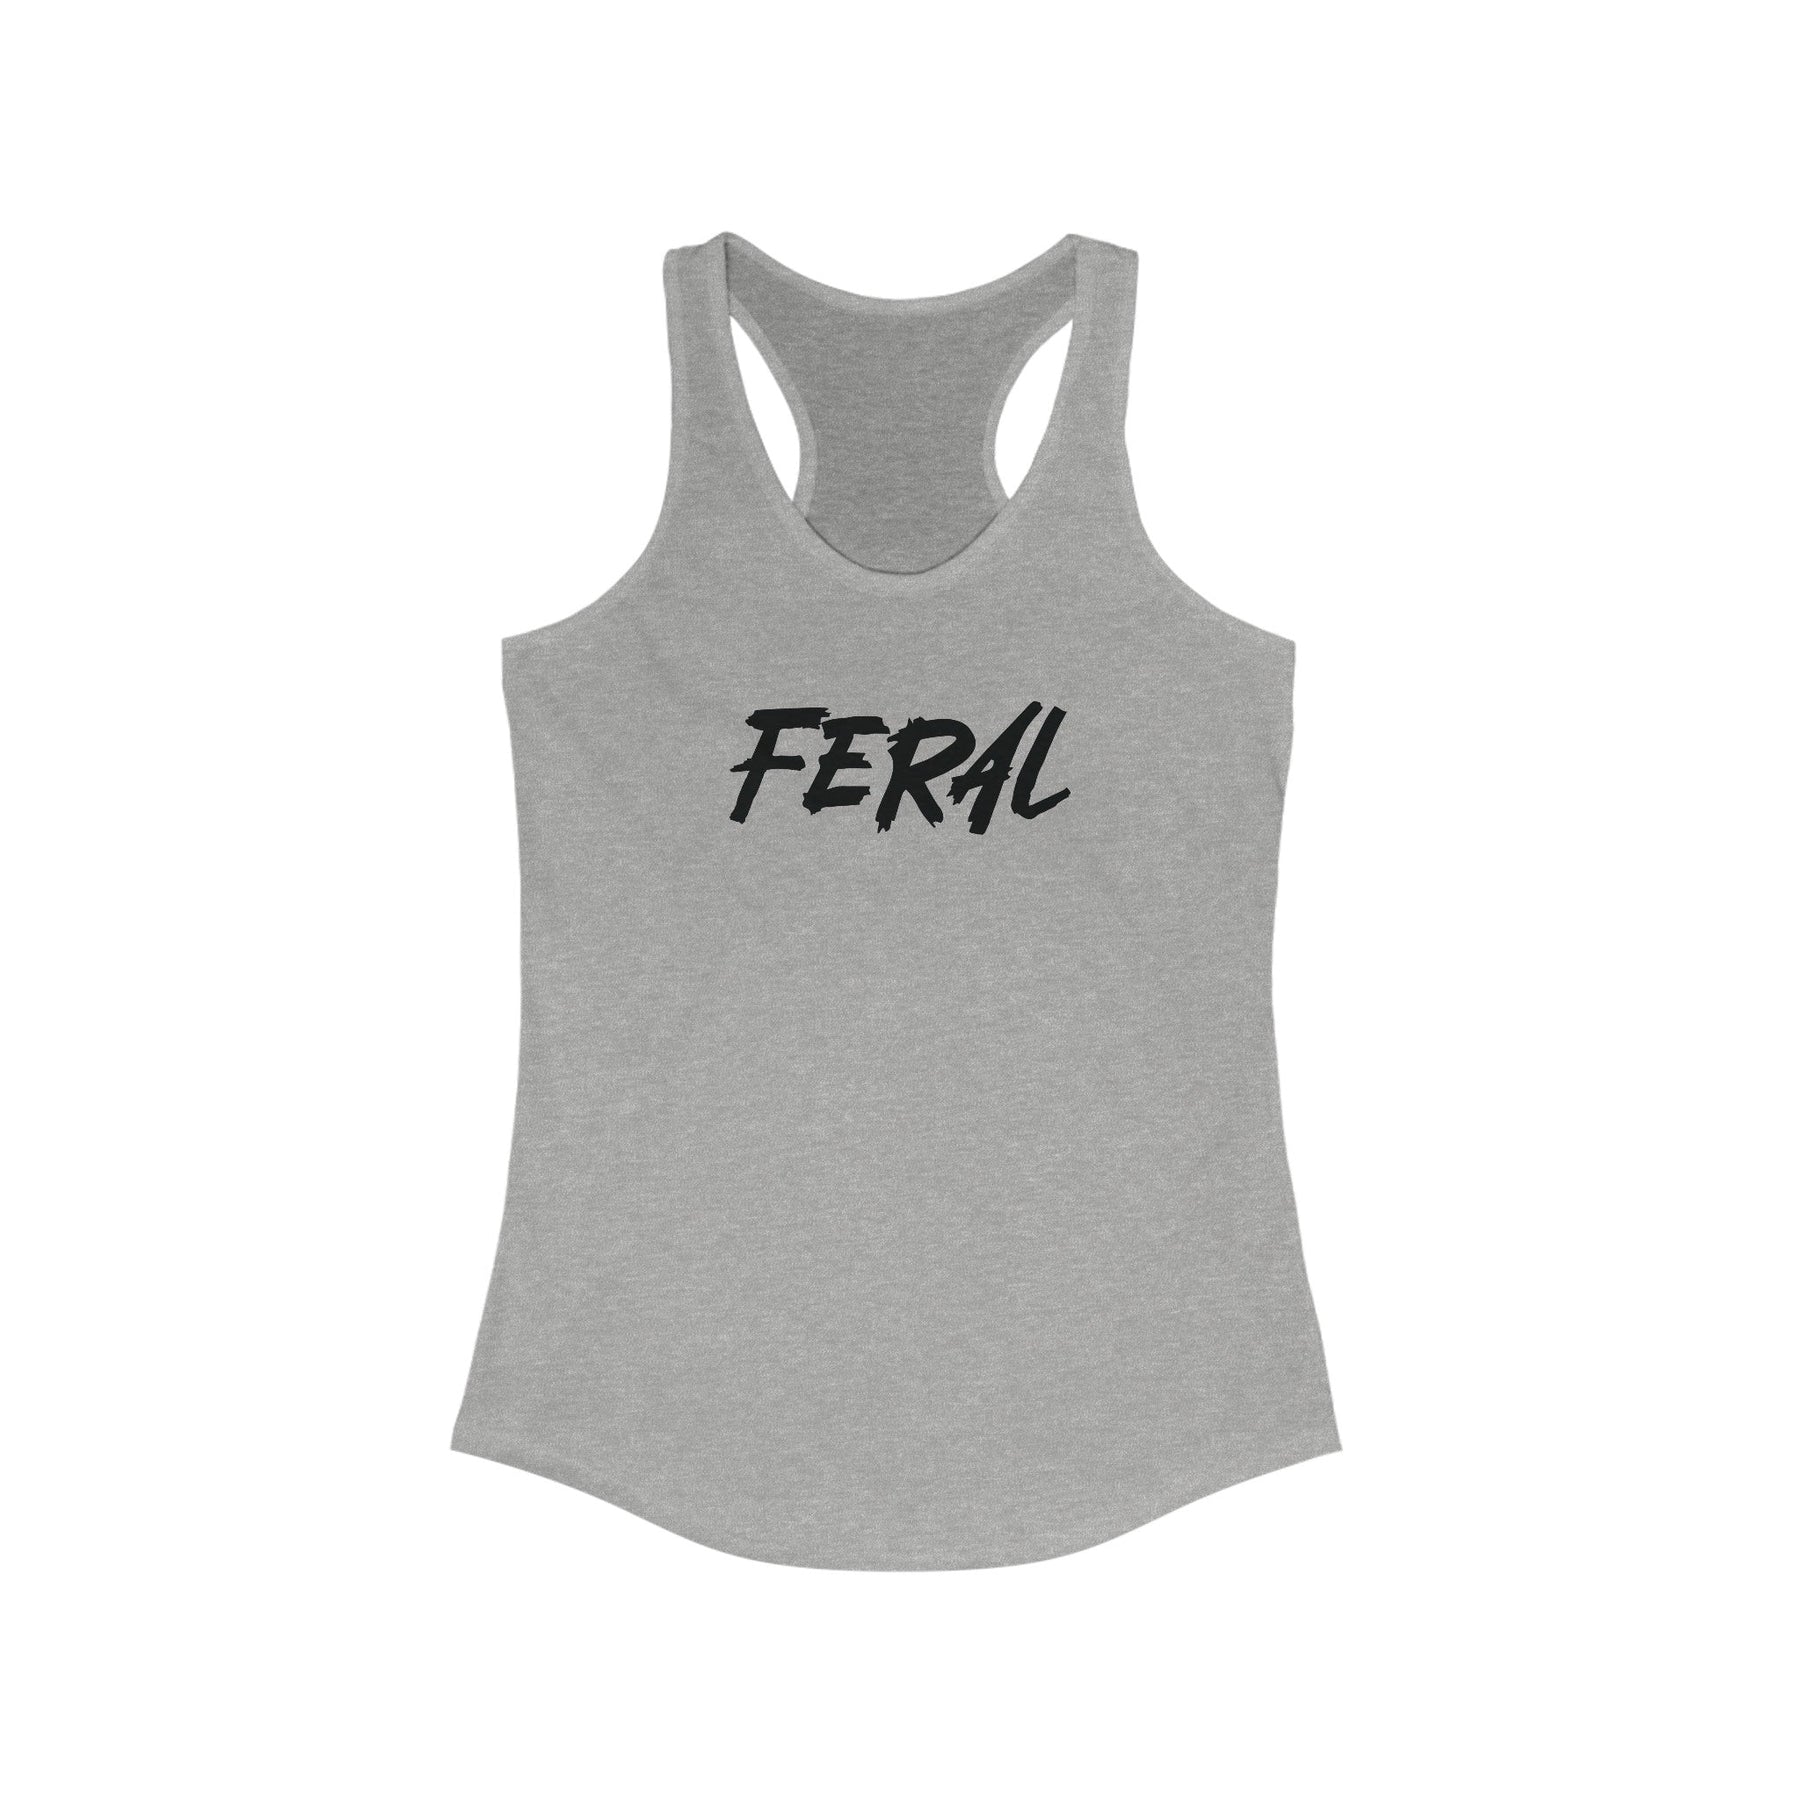 Feral Women's Racerback Tank - Goth Cloth Co.Tank Top64128271129352335972